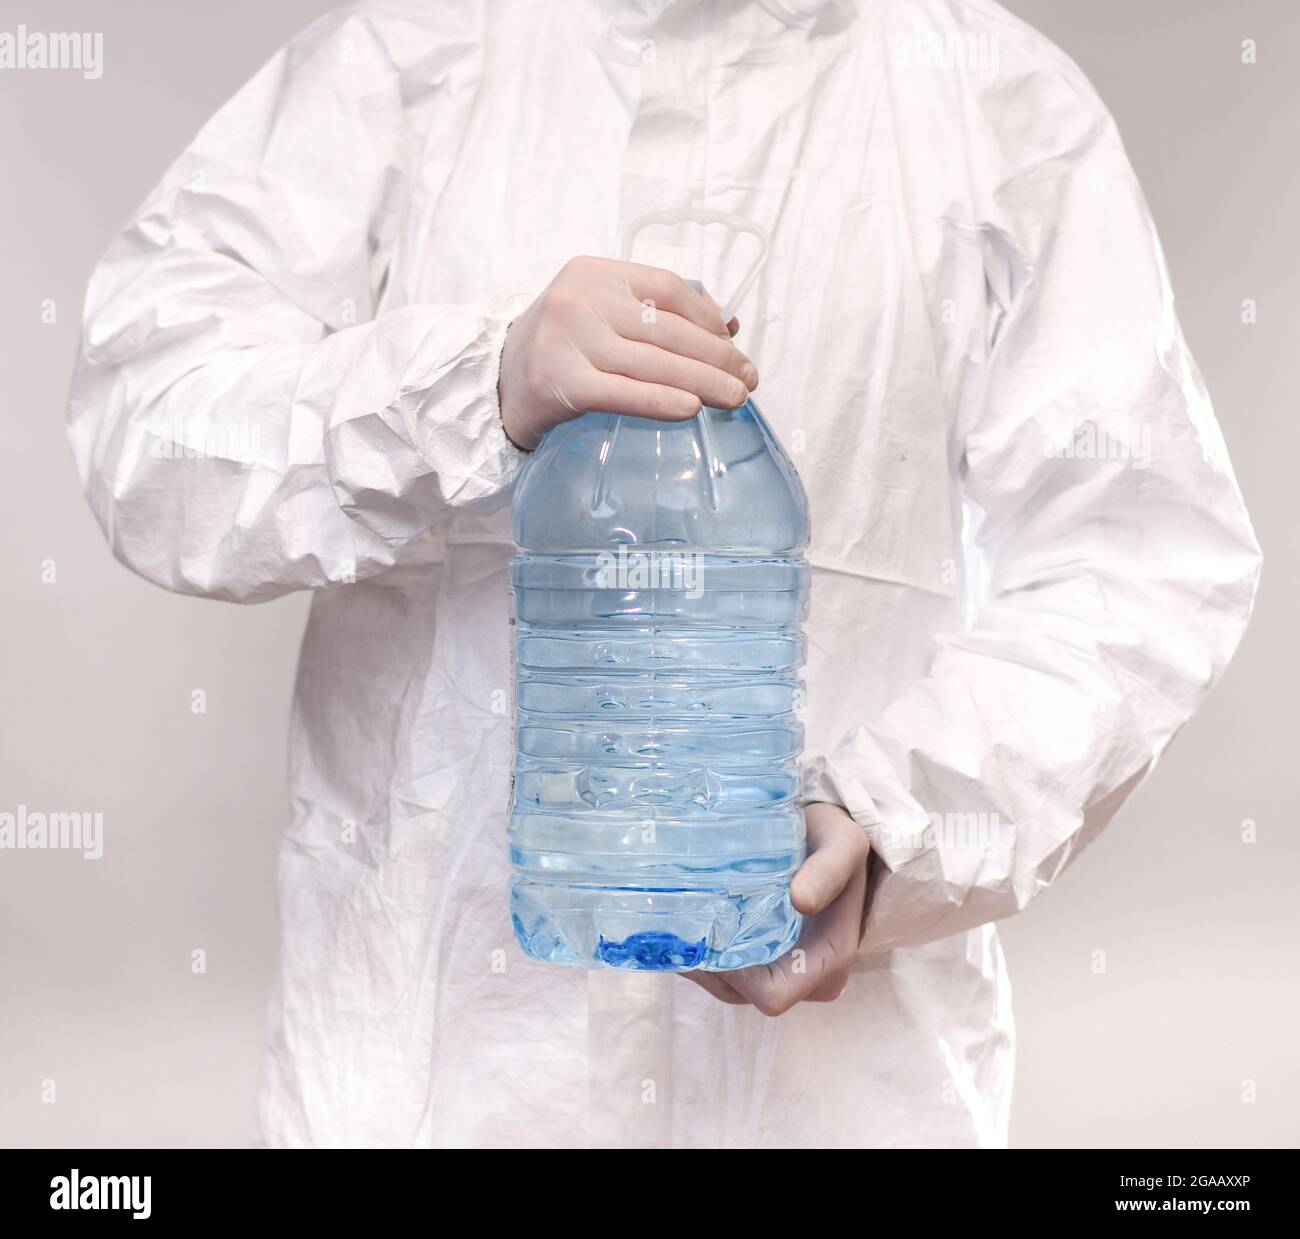 https://c8.alamy.com/comp/2GAAXXP/a-man-holds-a-large-full-plastic-transparent-bottle-with-water-liquid-2GAAXXP.jpg